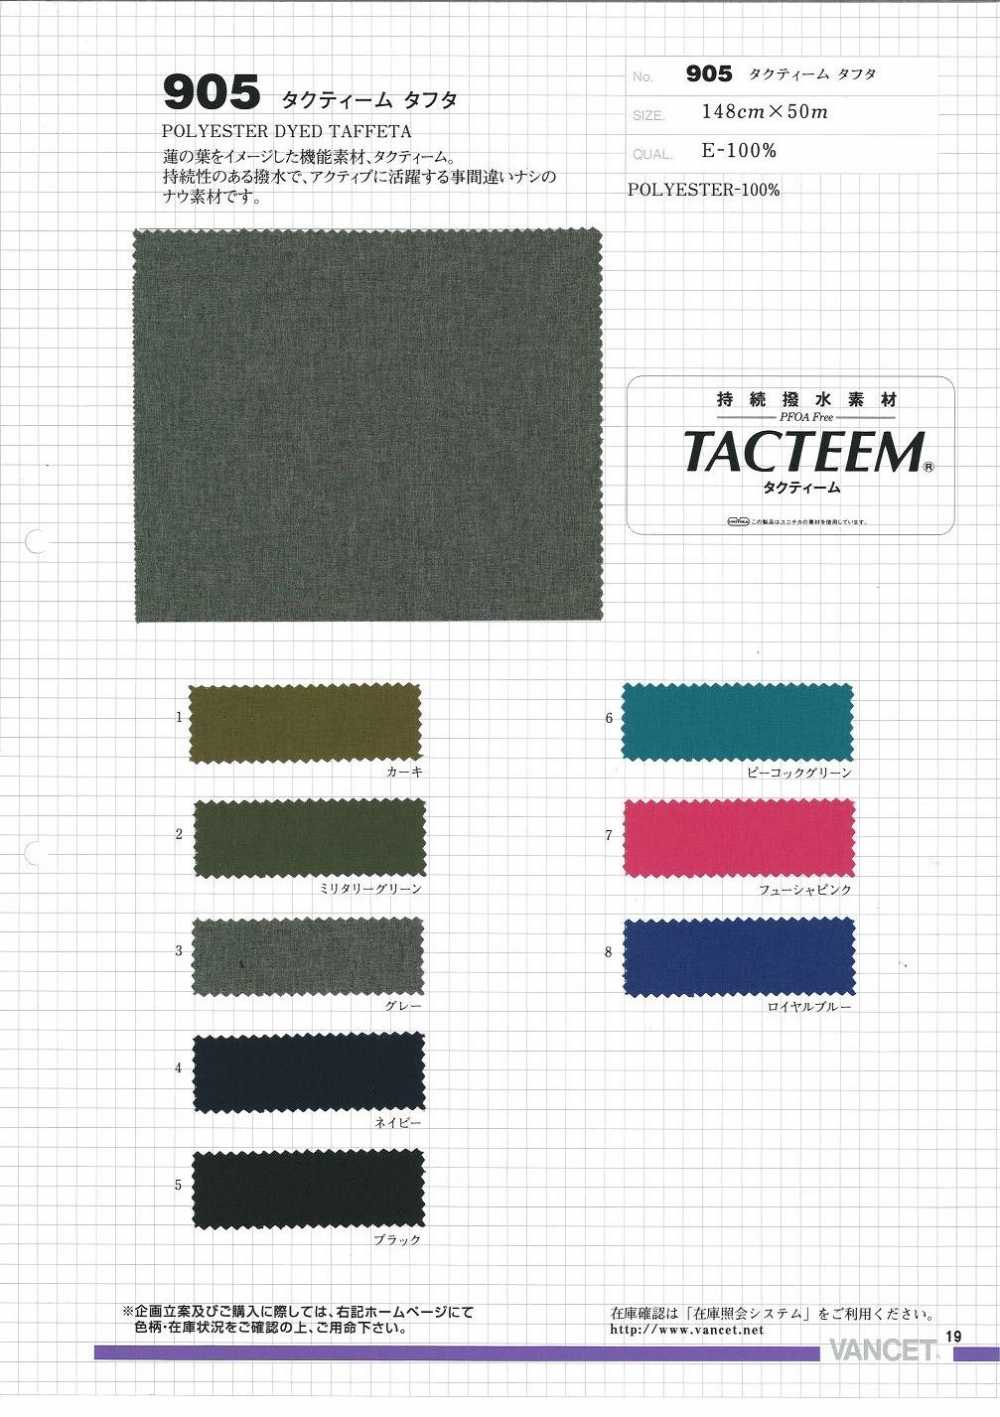 905 Taffetas Tactim[Fabrication De Textile] VANCET